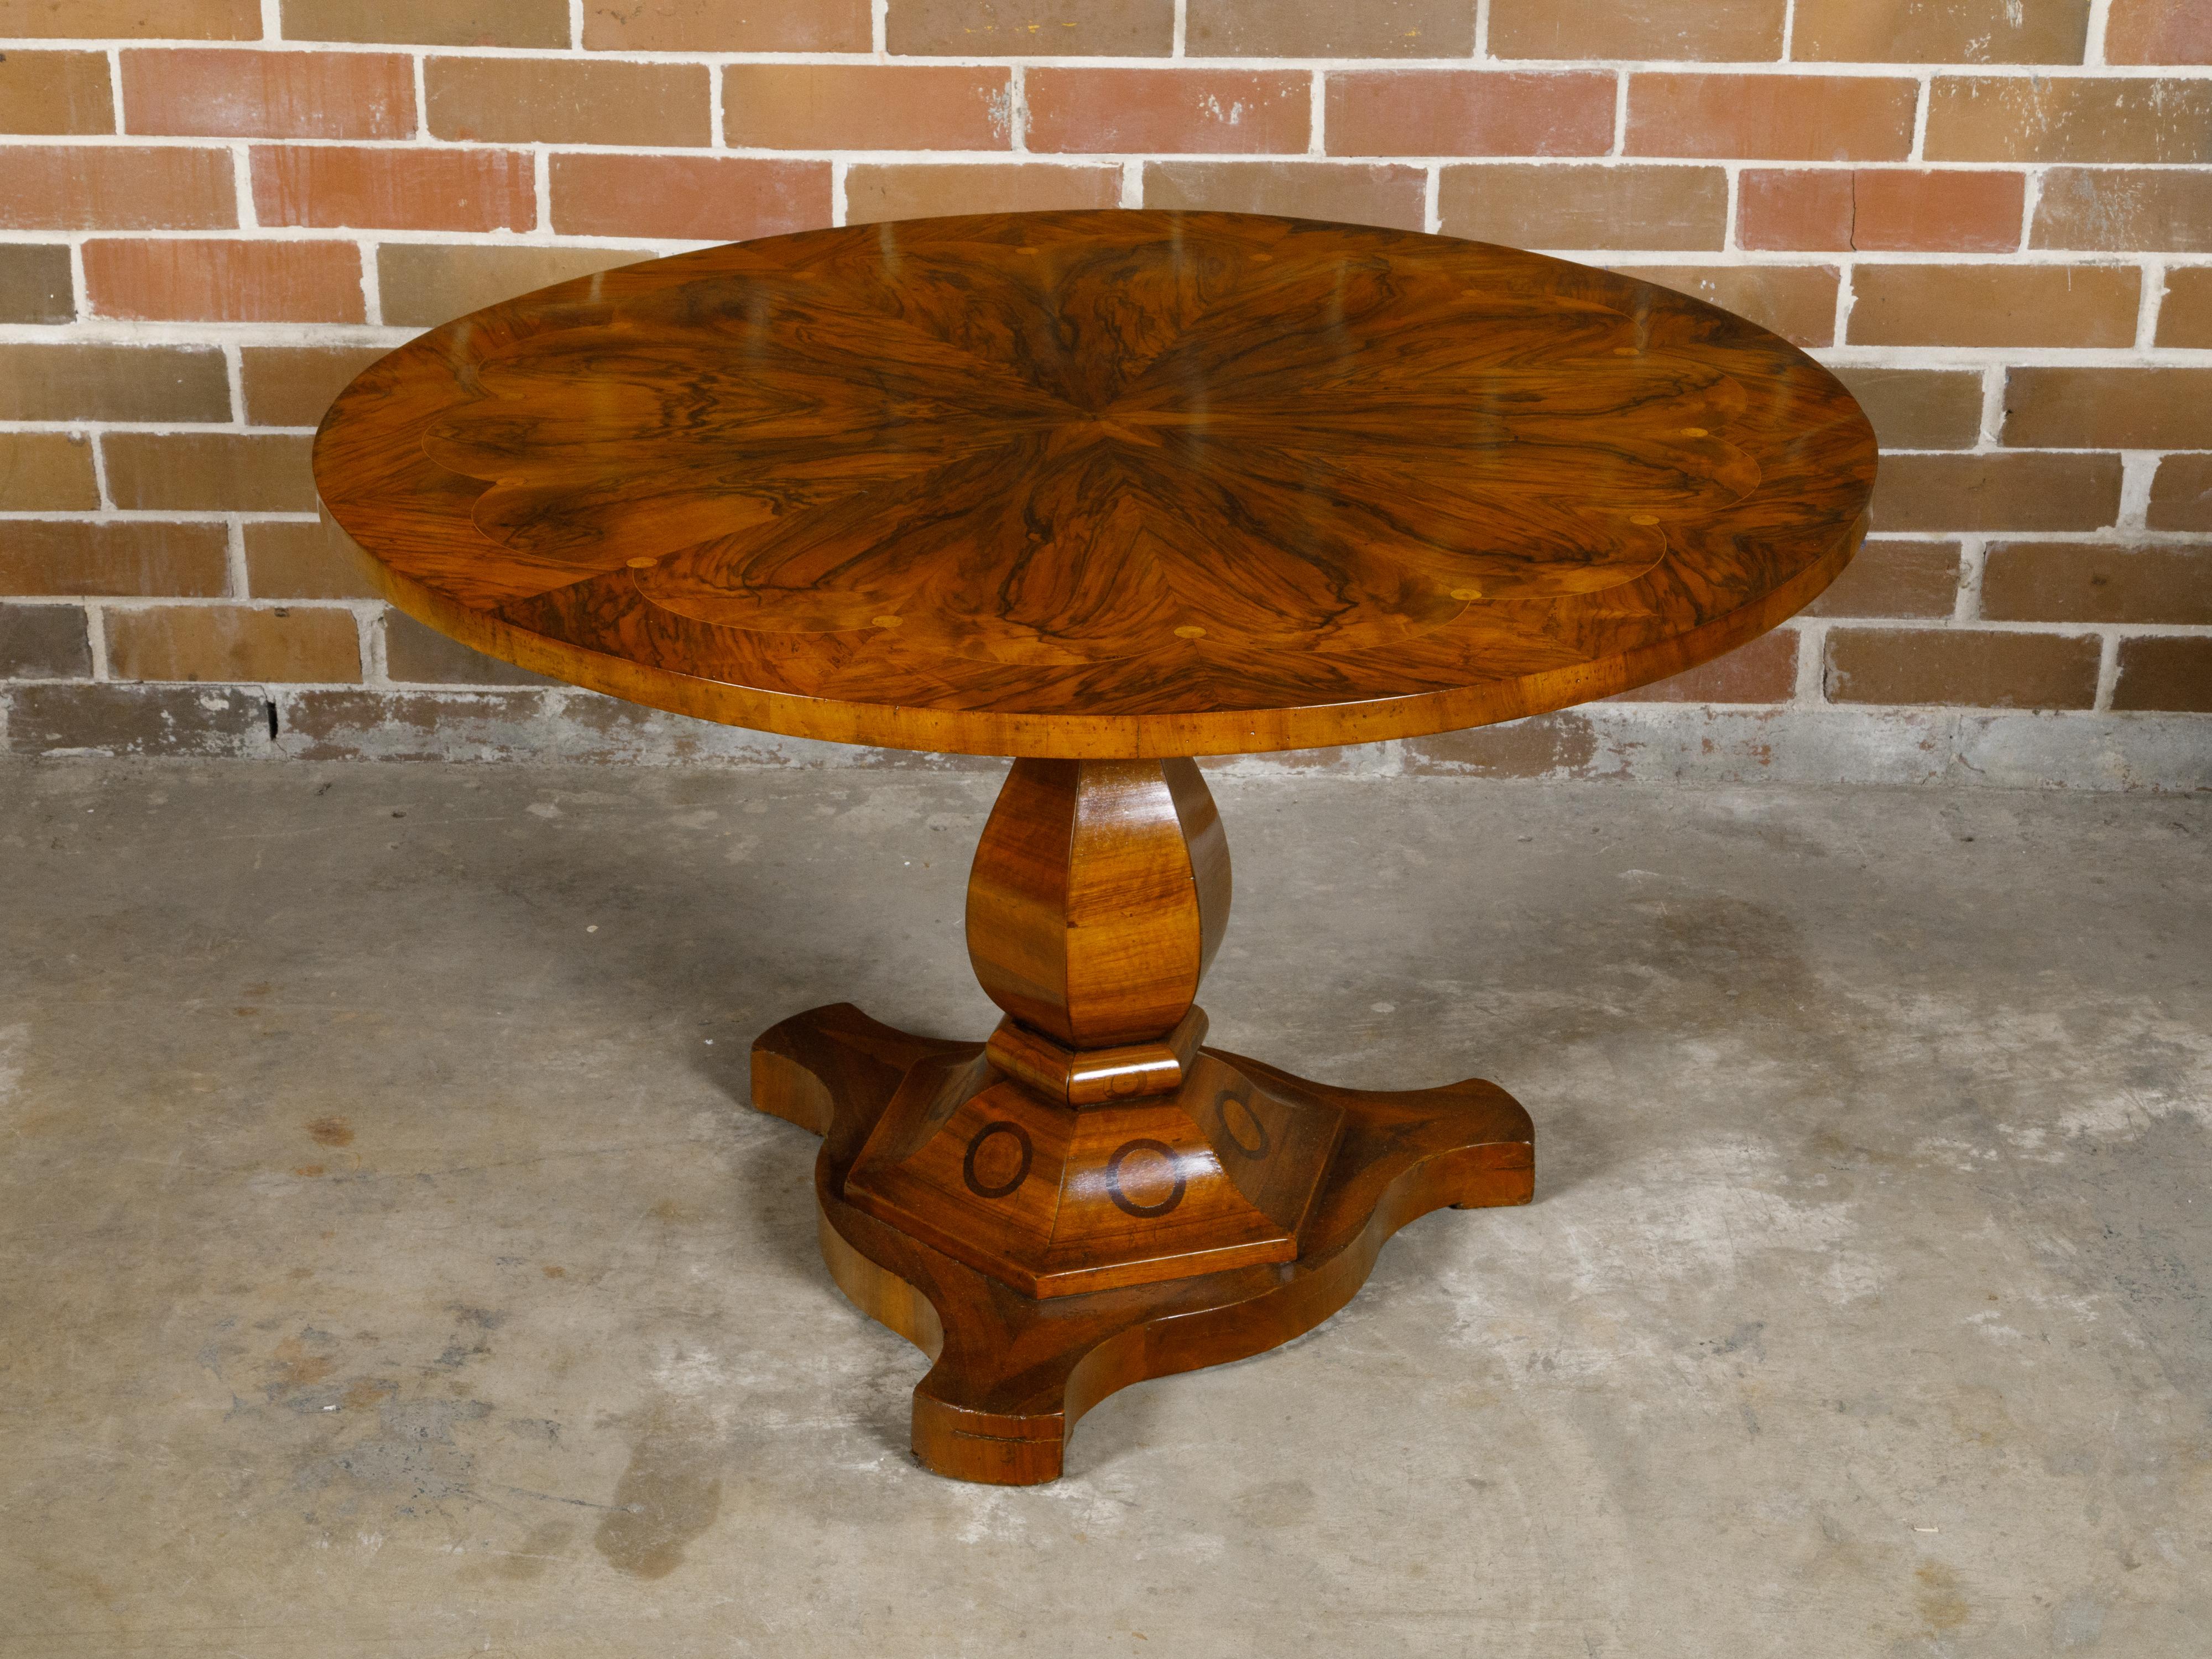 Biedermeier 19th Century Flamed Walnut Pedestal Table with Radiating Motif For Sale 5